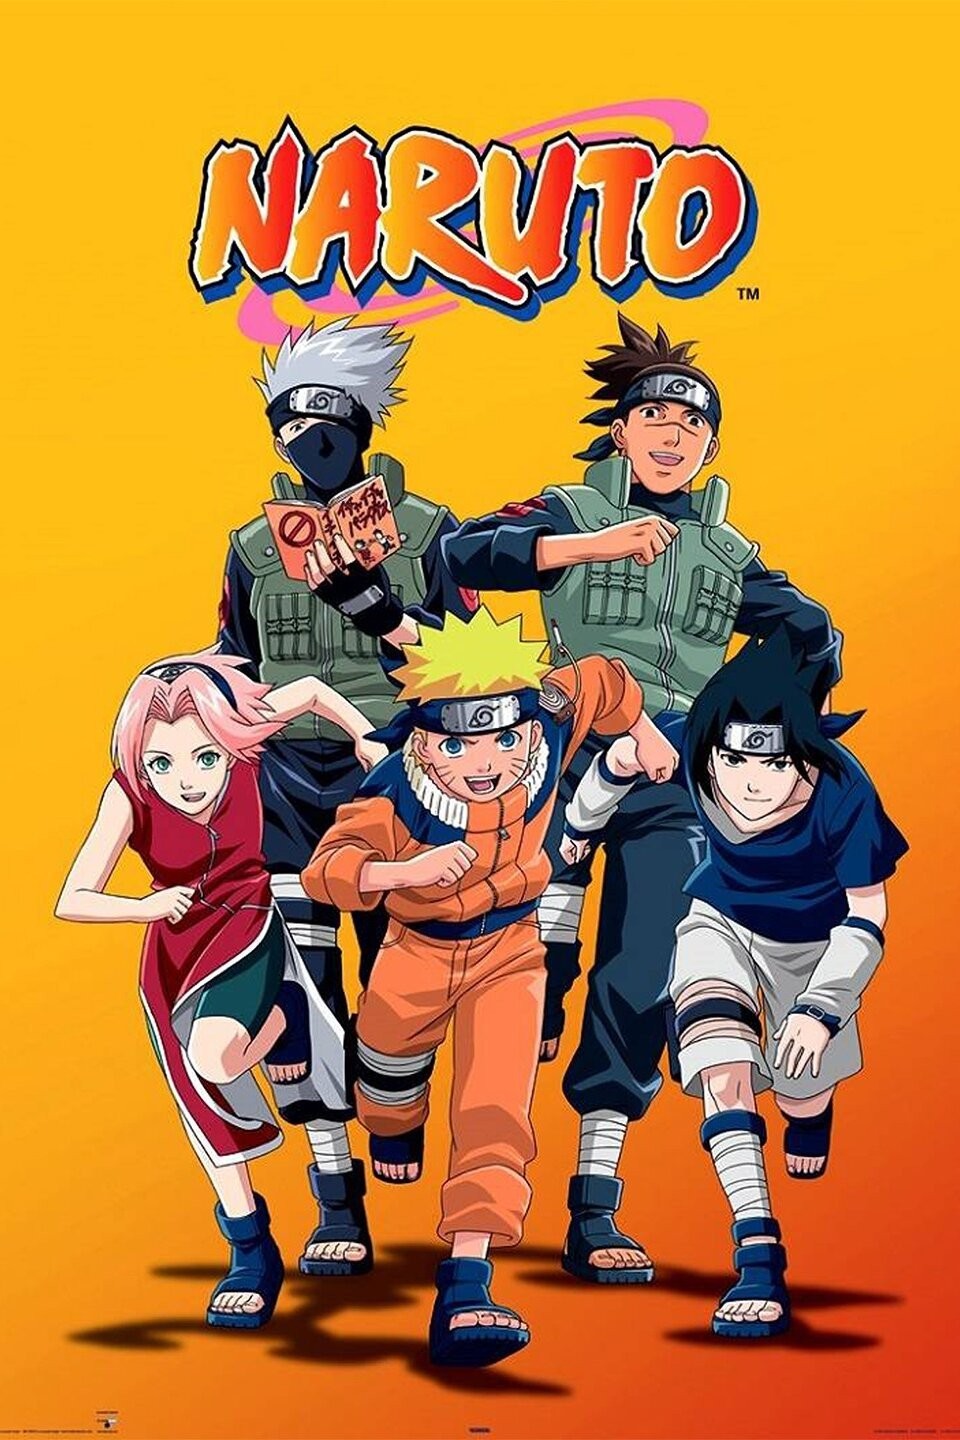 Naruto Season 1 [Hindi + Japanese] WEB-DL 720p 1080p HD | J-Drama TV Series